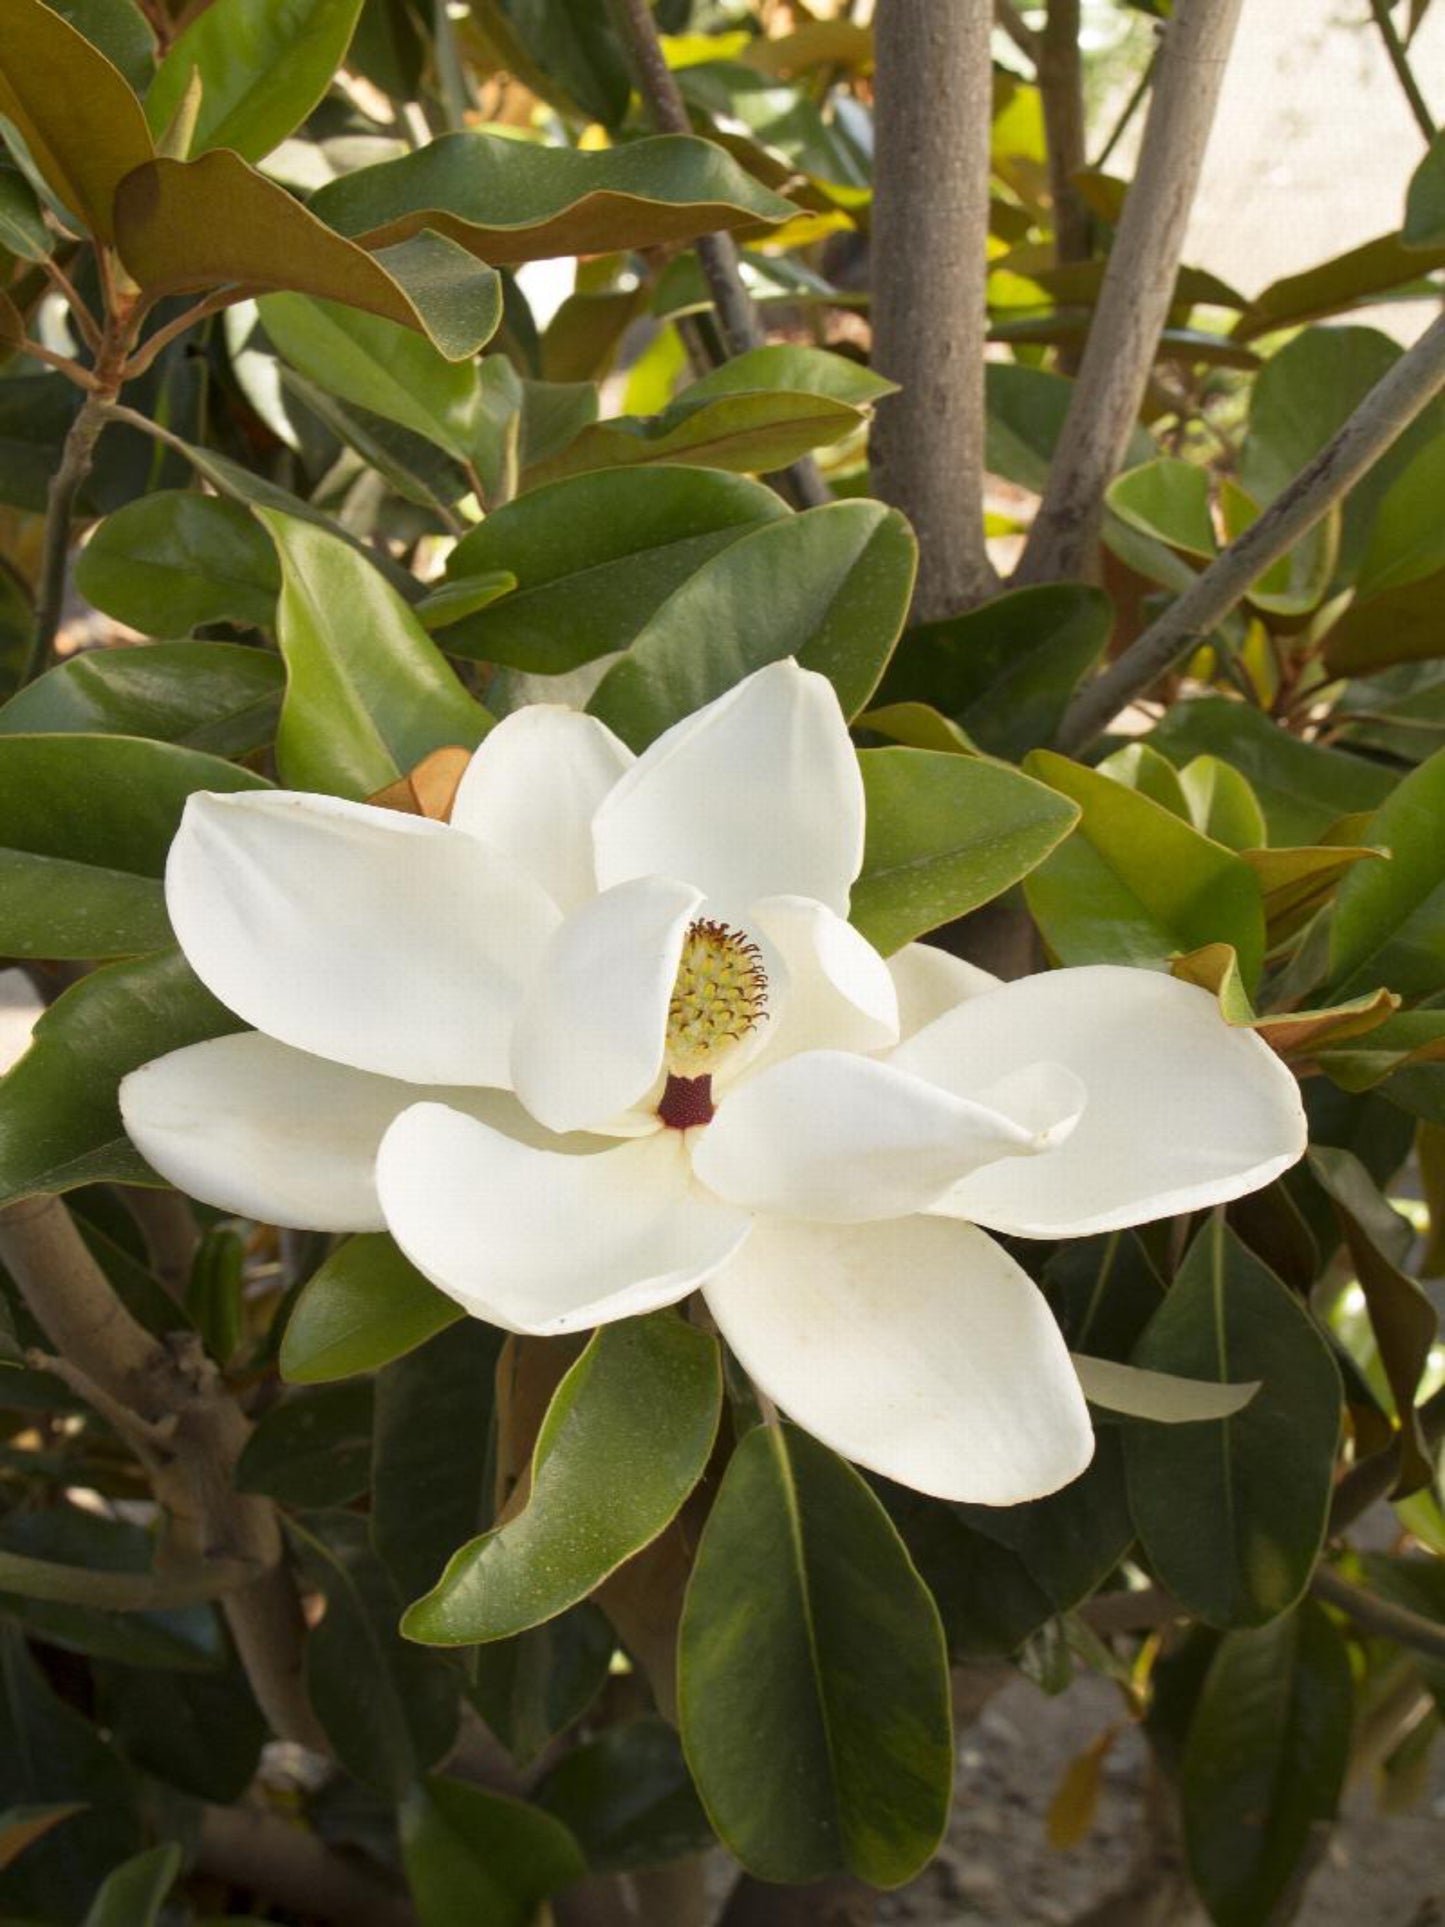 magnolia grandiflora is host tree for tiger swallowtail